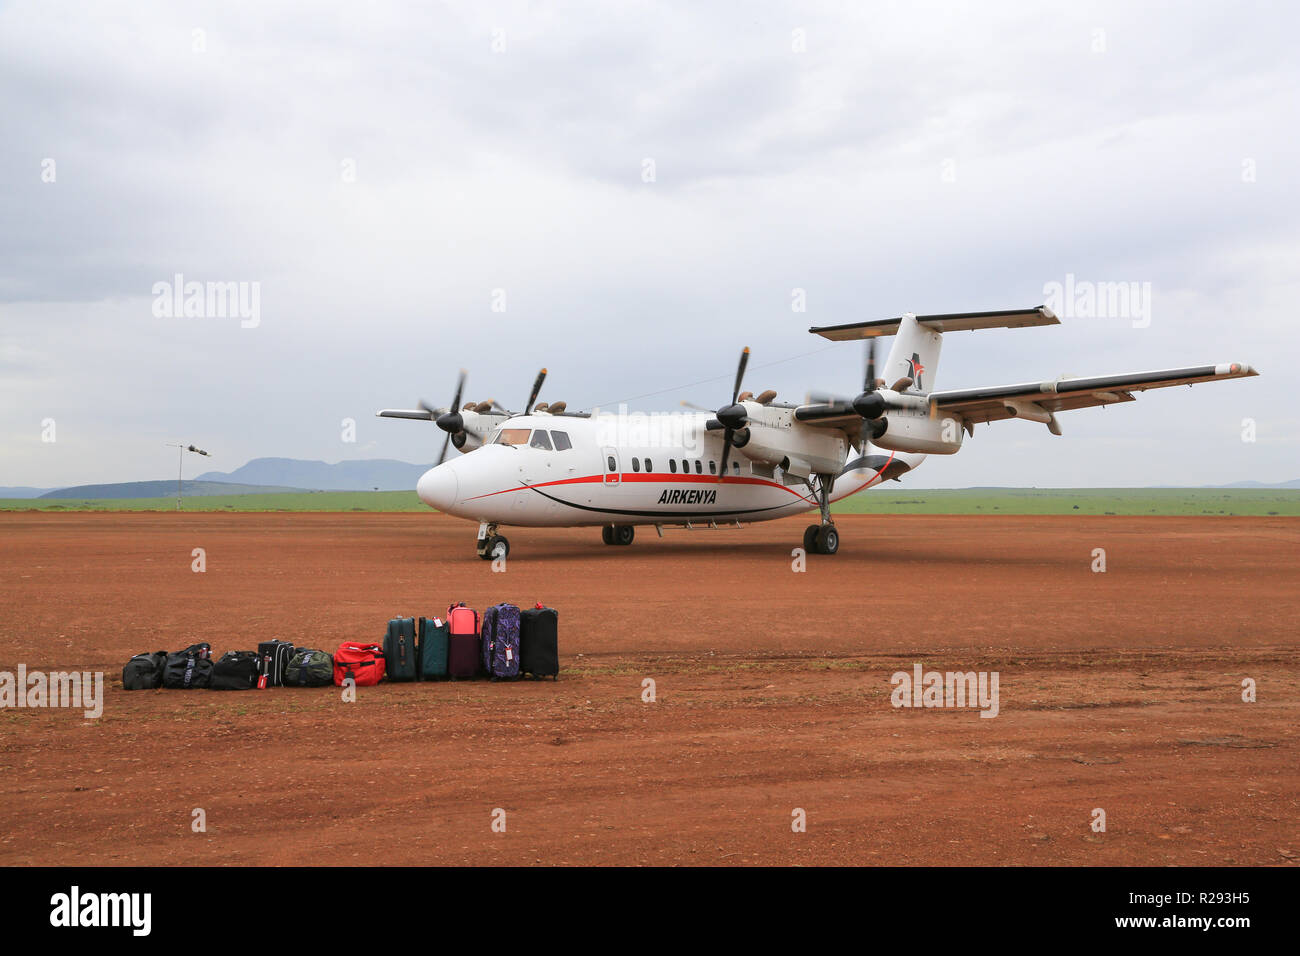 An Airkenya plane is taxiing toward waiting passengers and their luggage at the Keekorok Airstrip in Masai Mara National Reserve, Narok County, Kenya. Stock Photo